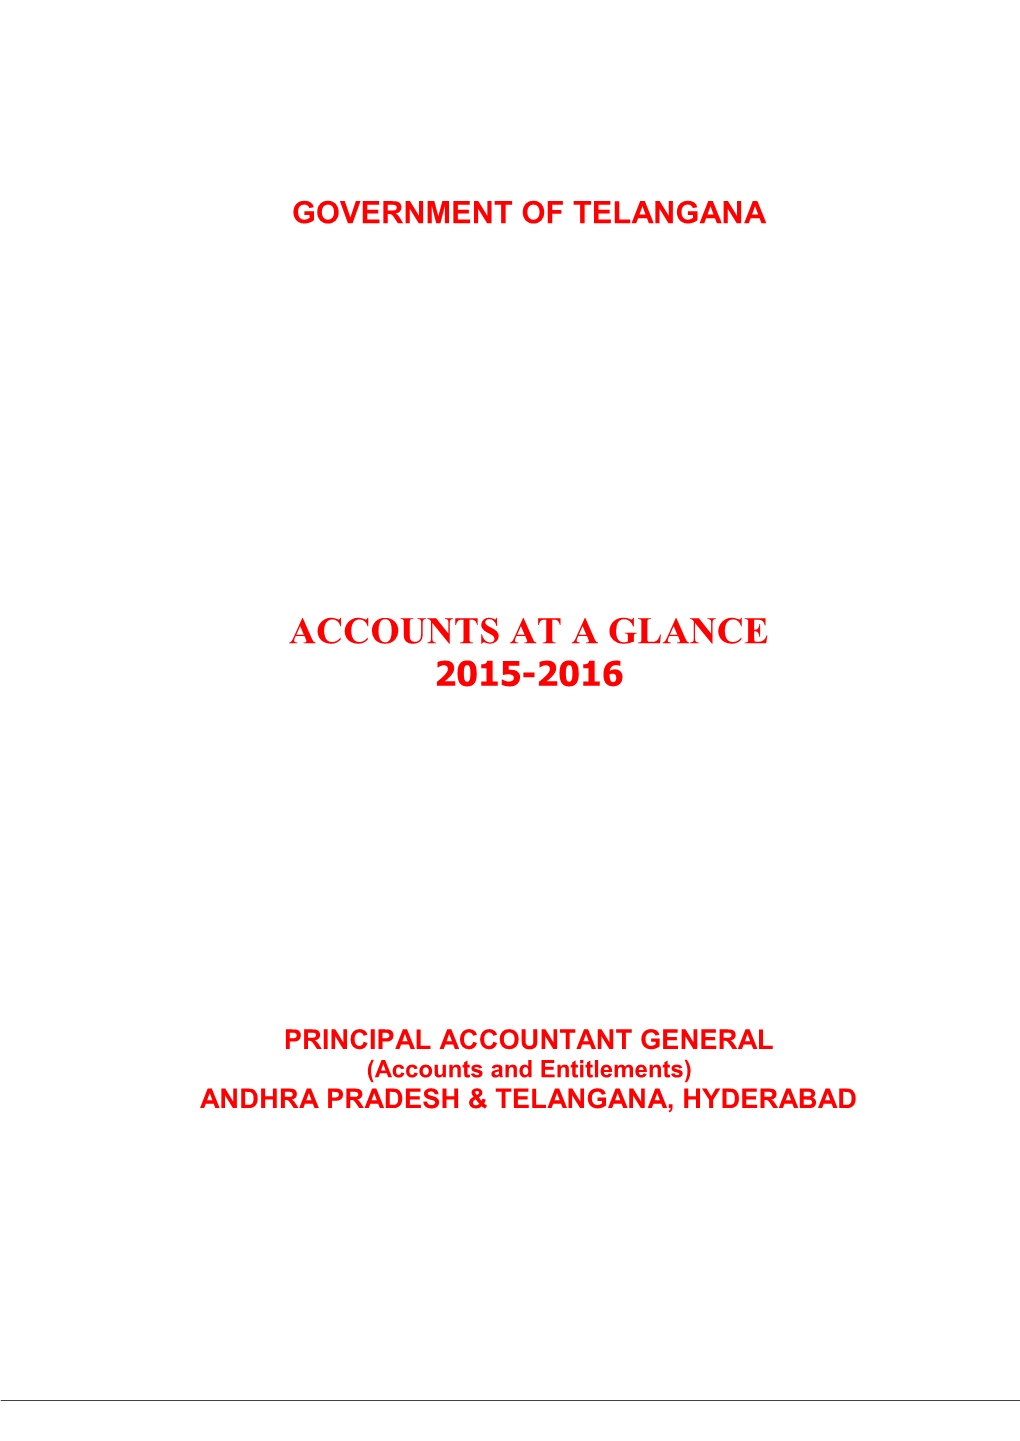 Accounts at a Glance 2015-2016